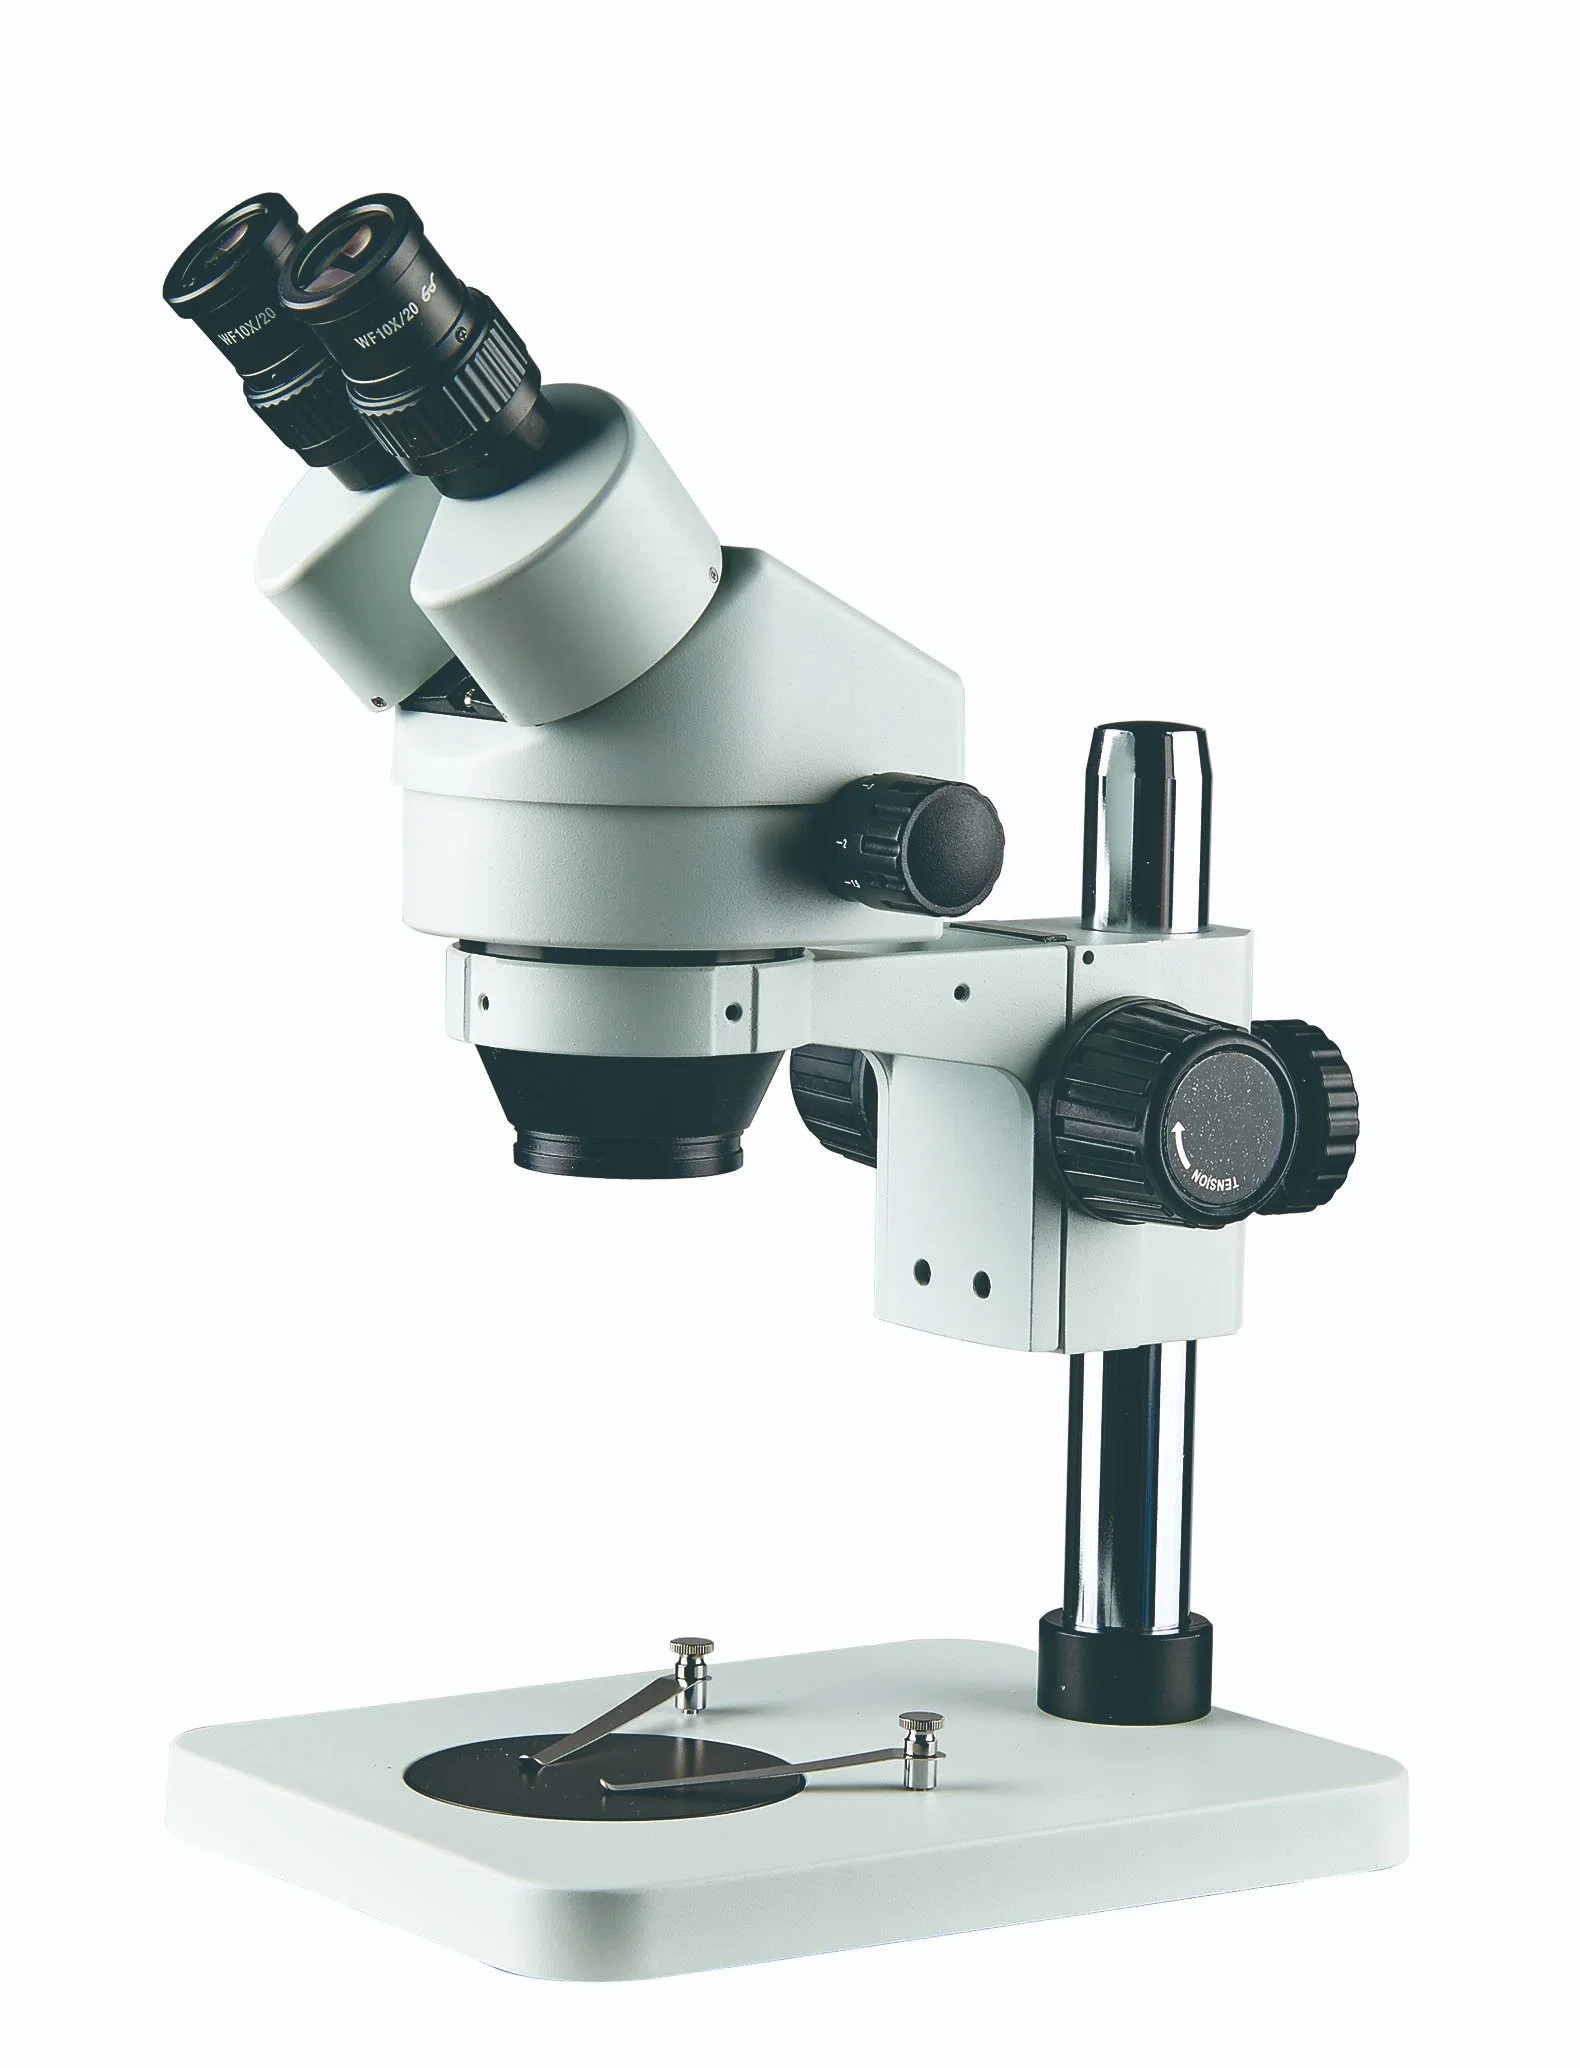 Stereoscopic Trinocular Zoom Stereo Microscope Lx-0745